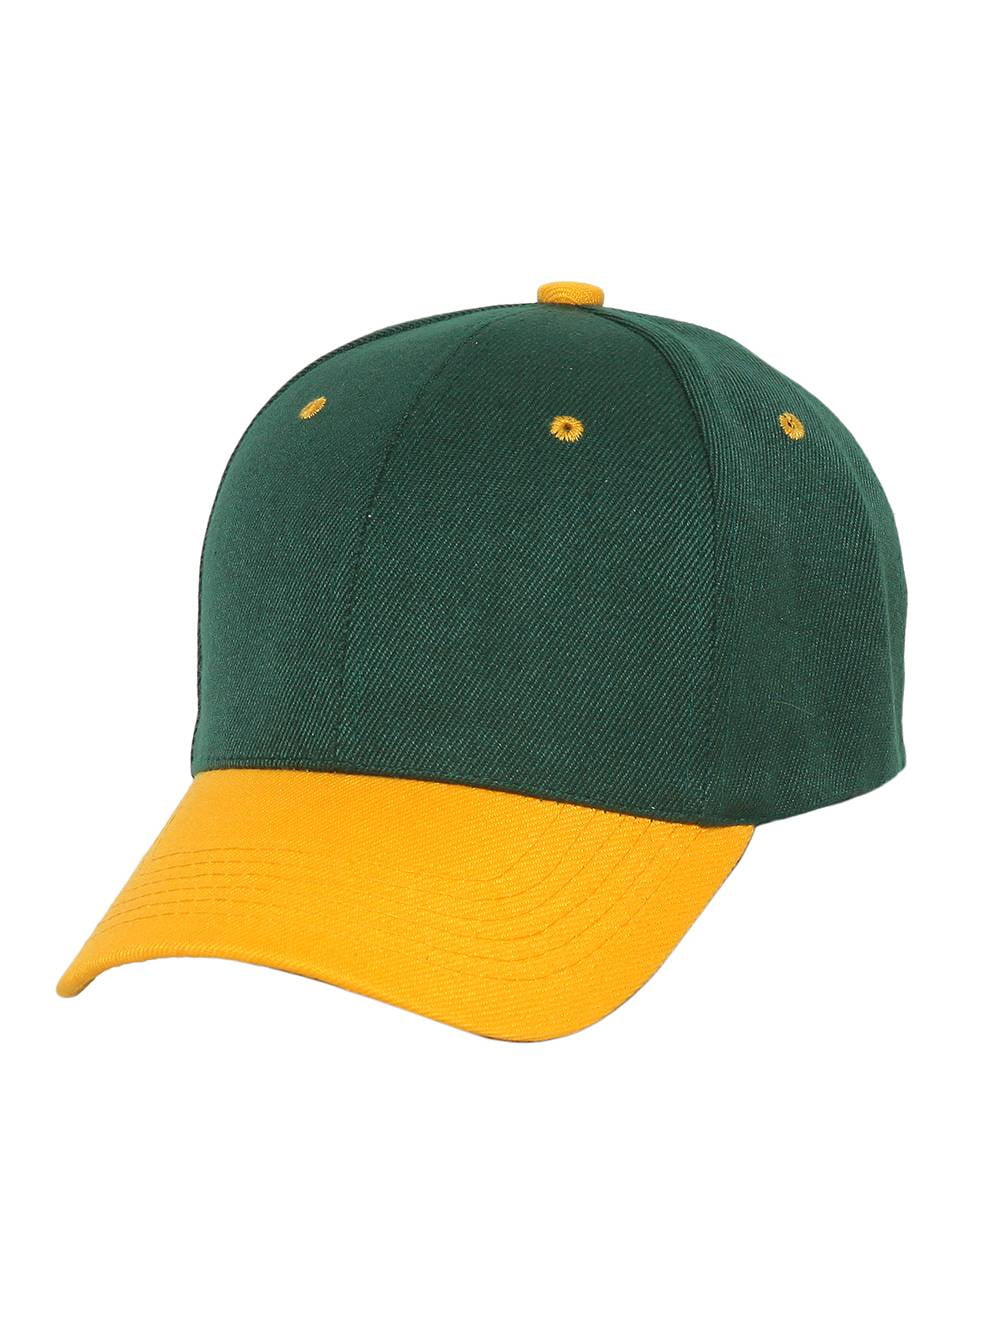 Two-Tone Adjustable Baseball Cap, Green Yellow